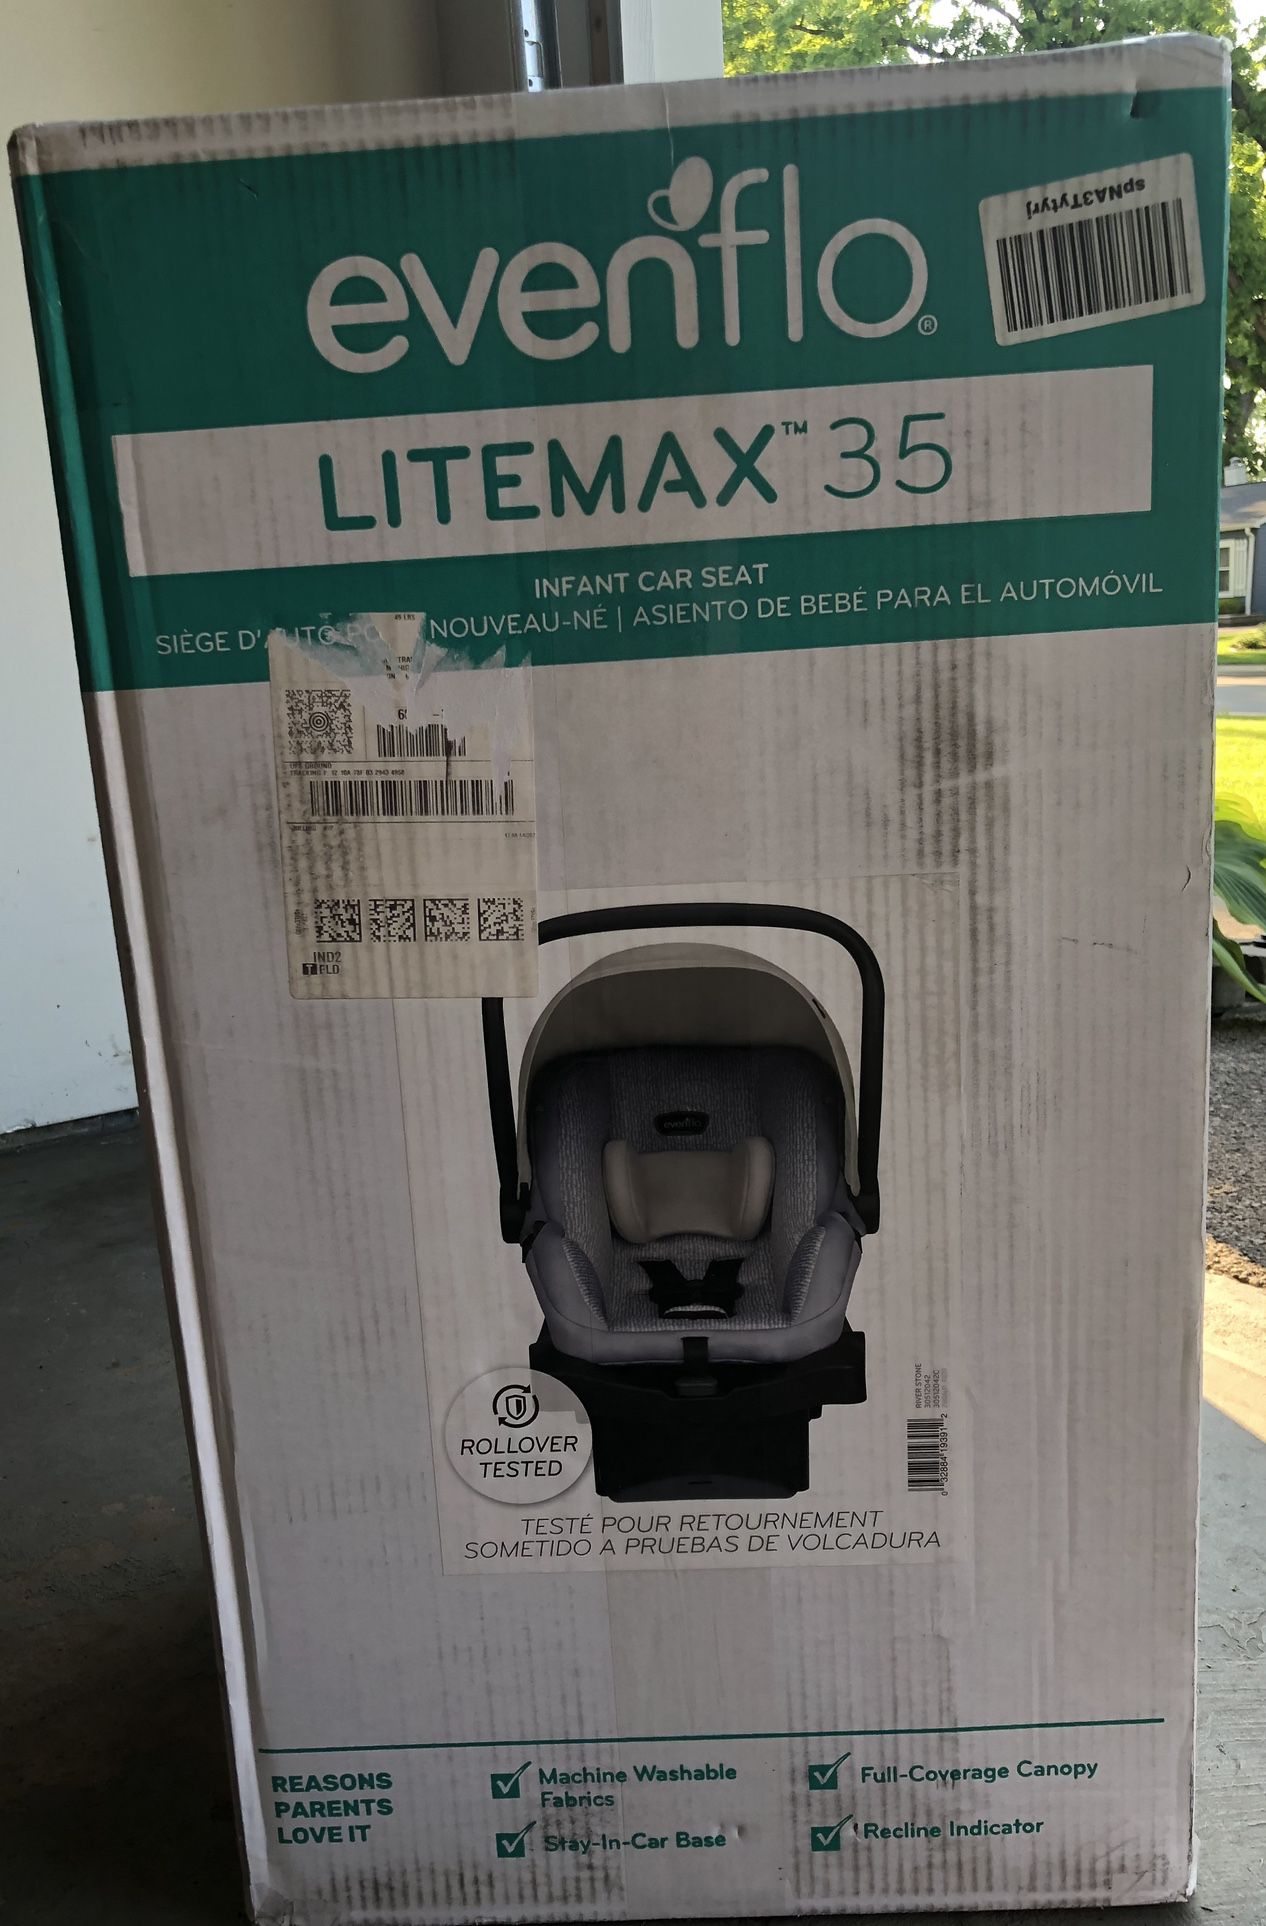 Evenflo Litemax 35 infant car seat